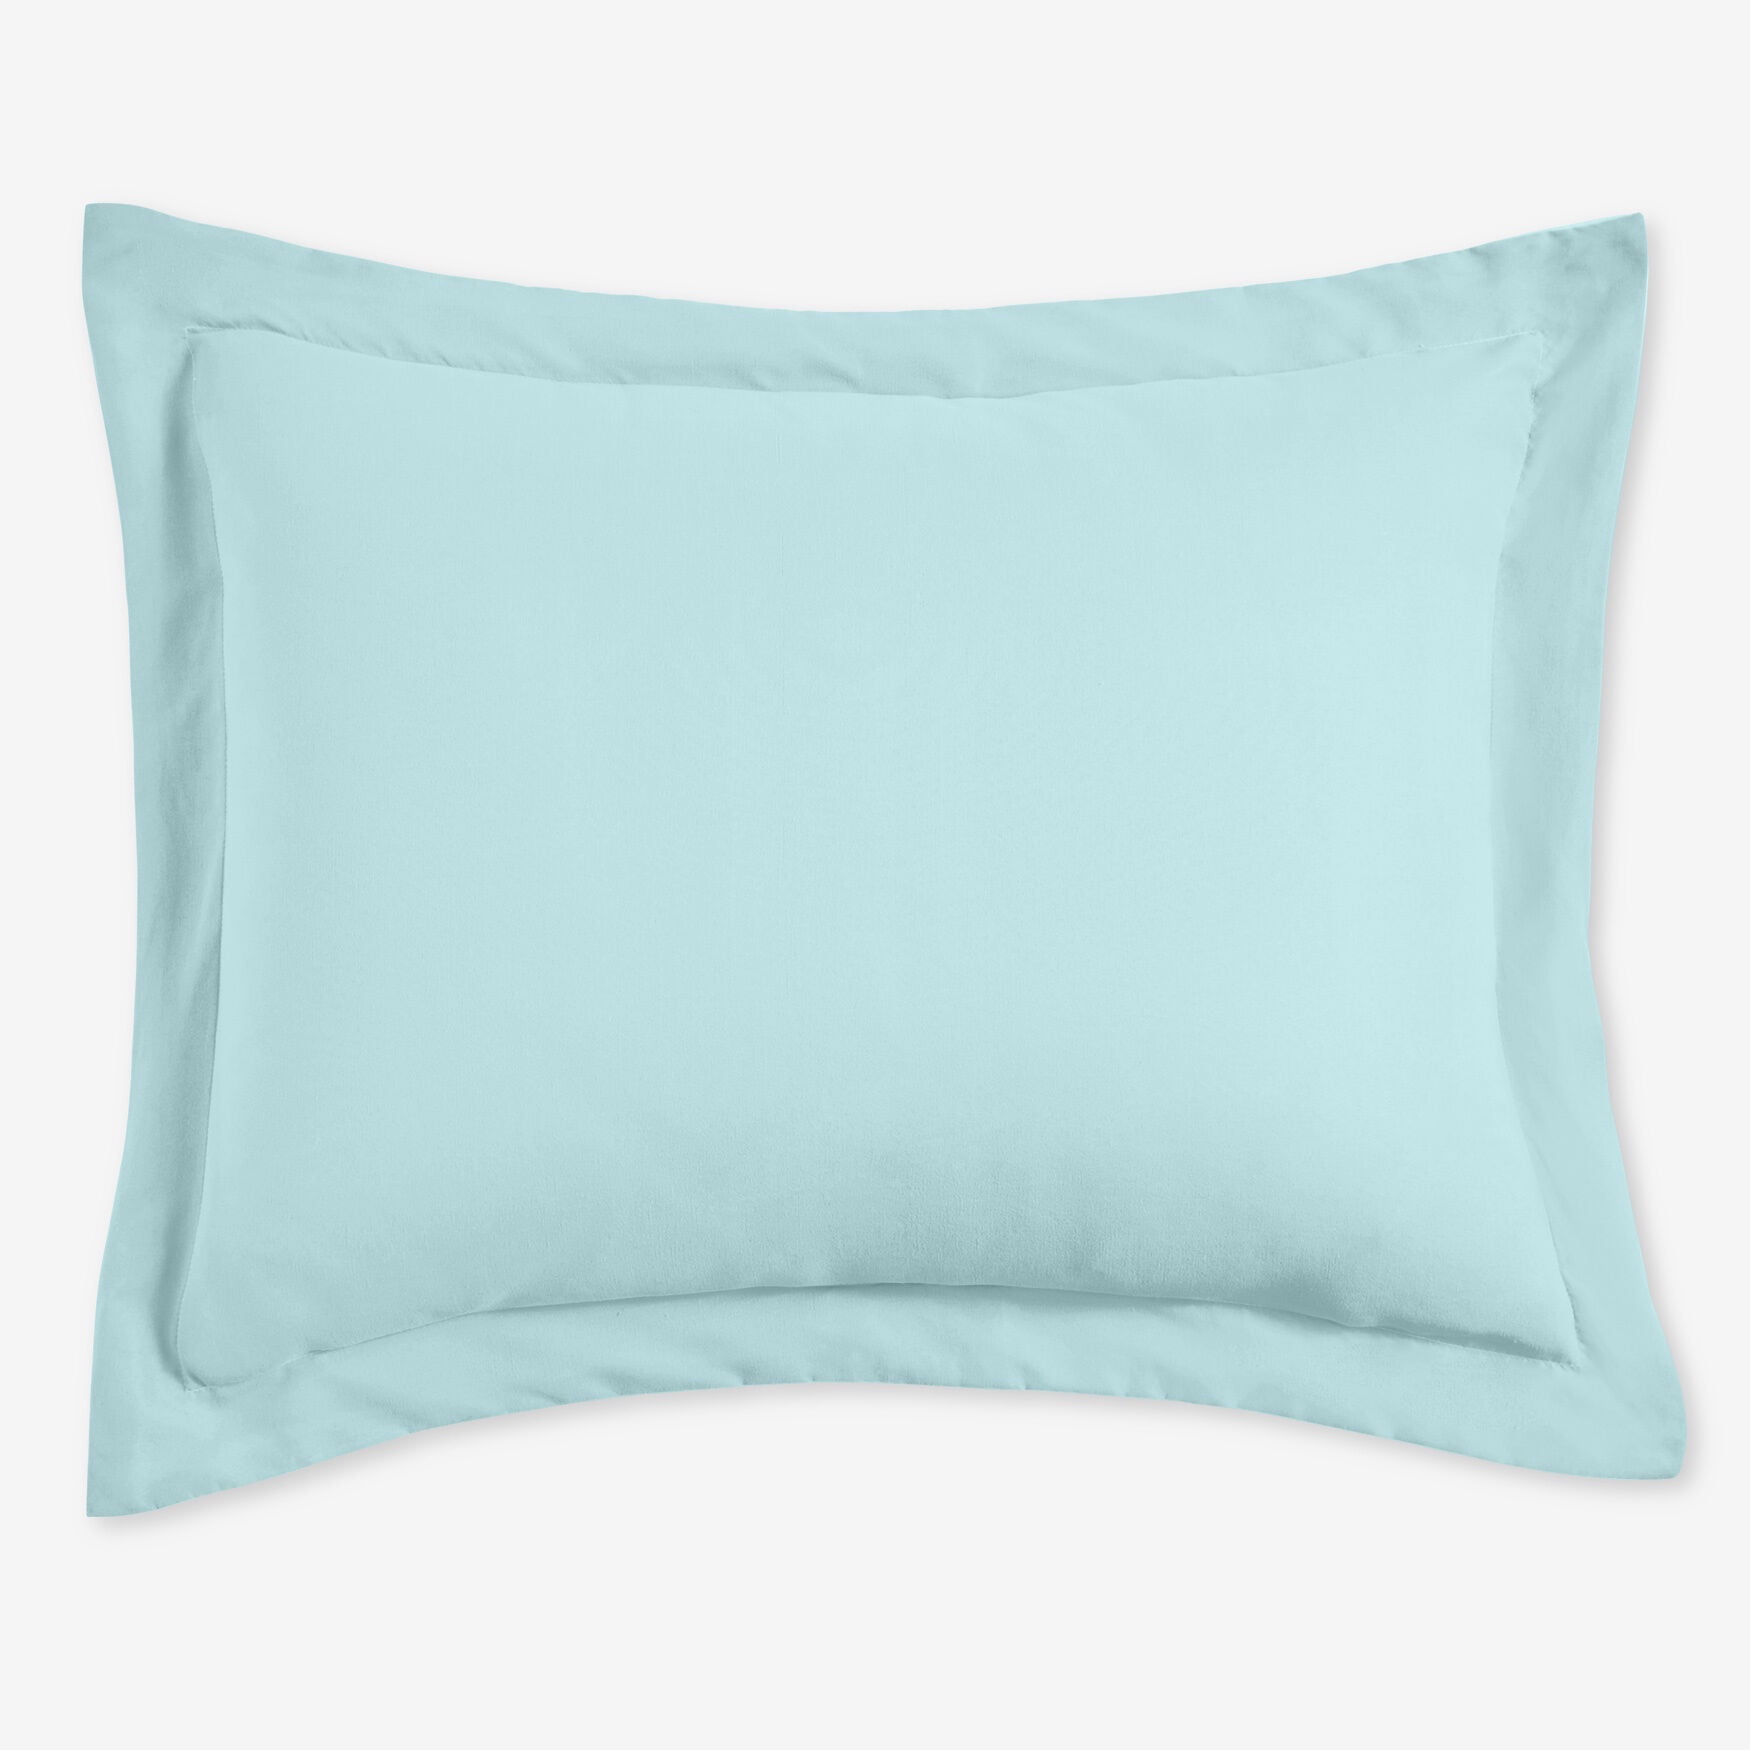 2 Wrap-Around Wonderskirt Standard Pillow Sham in Light Blue 